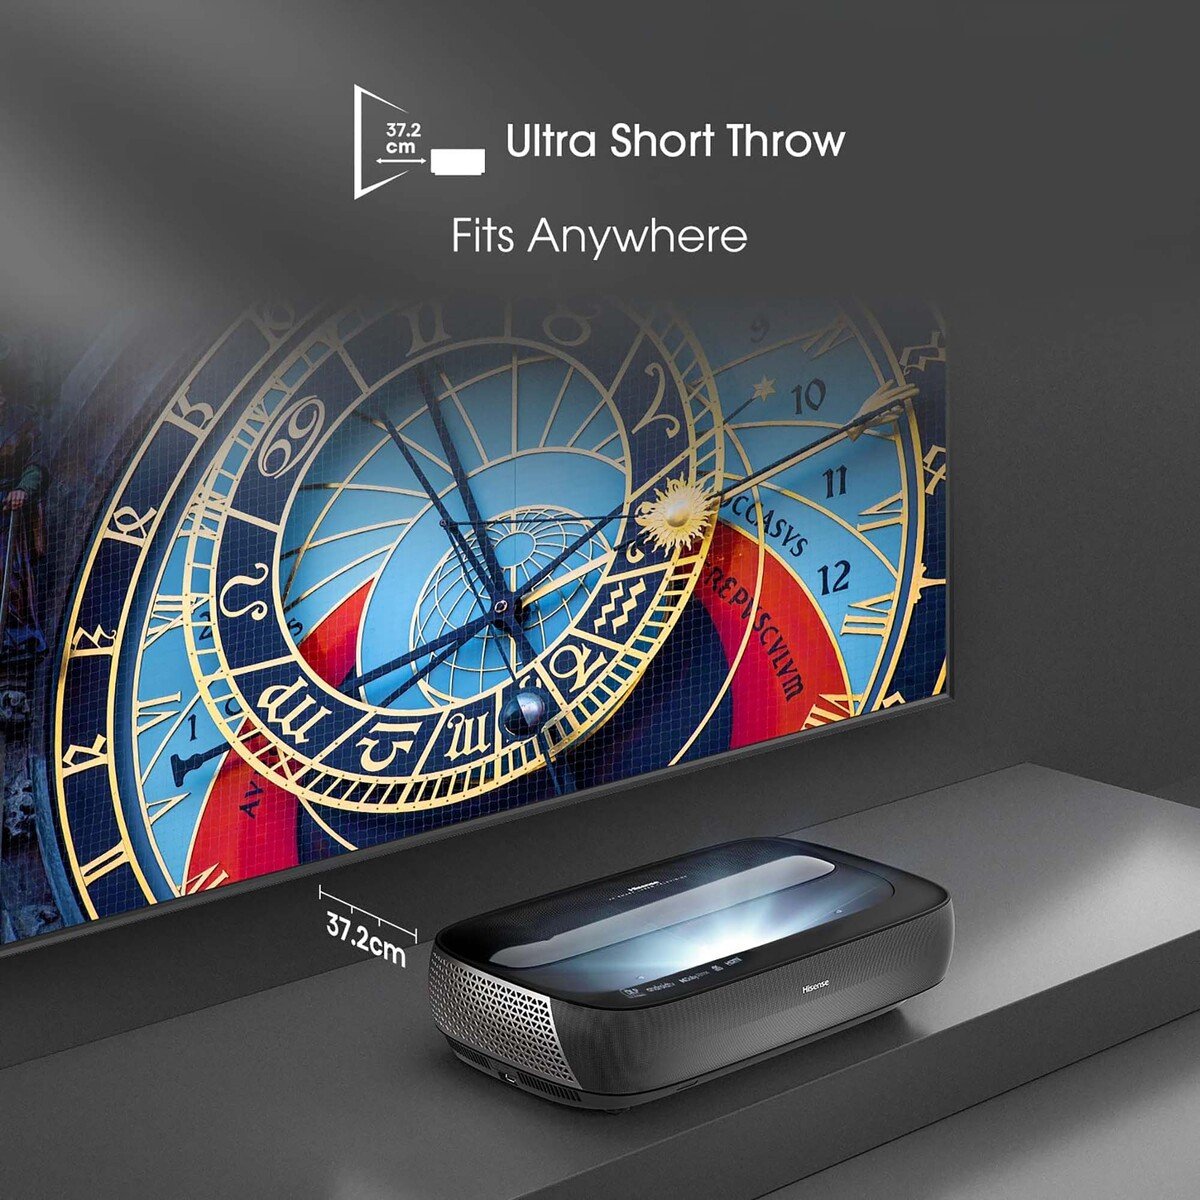 Hisense 120 Inches 4K UHD Laser TV, Black, 120L9G